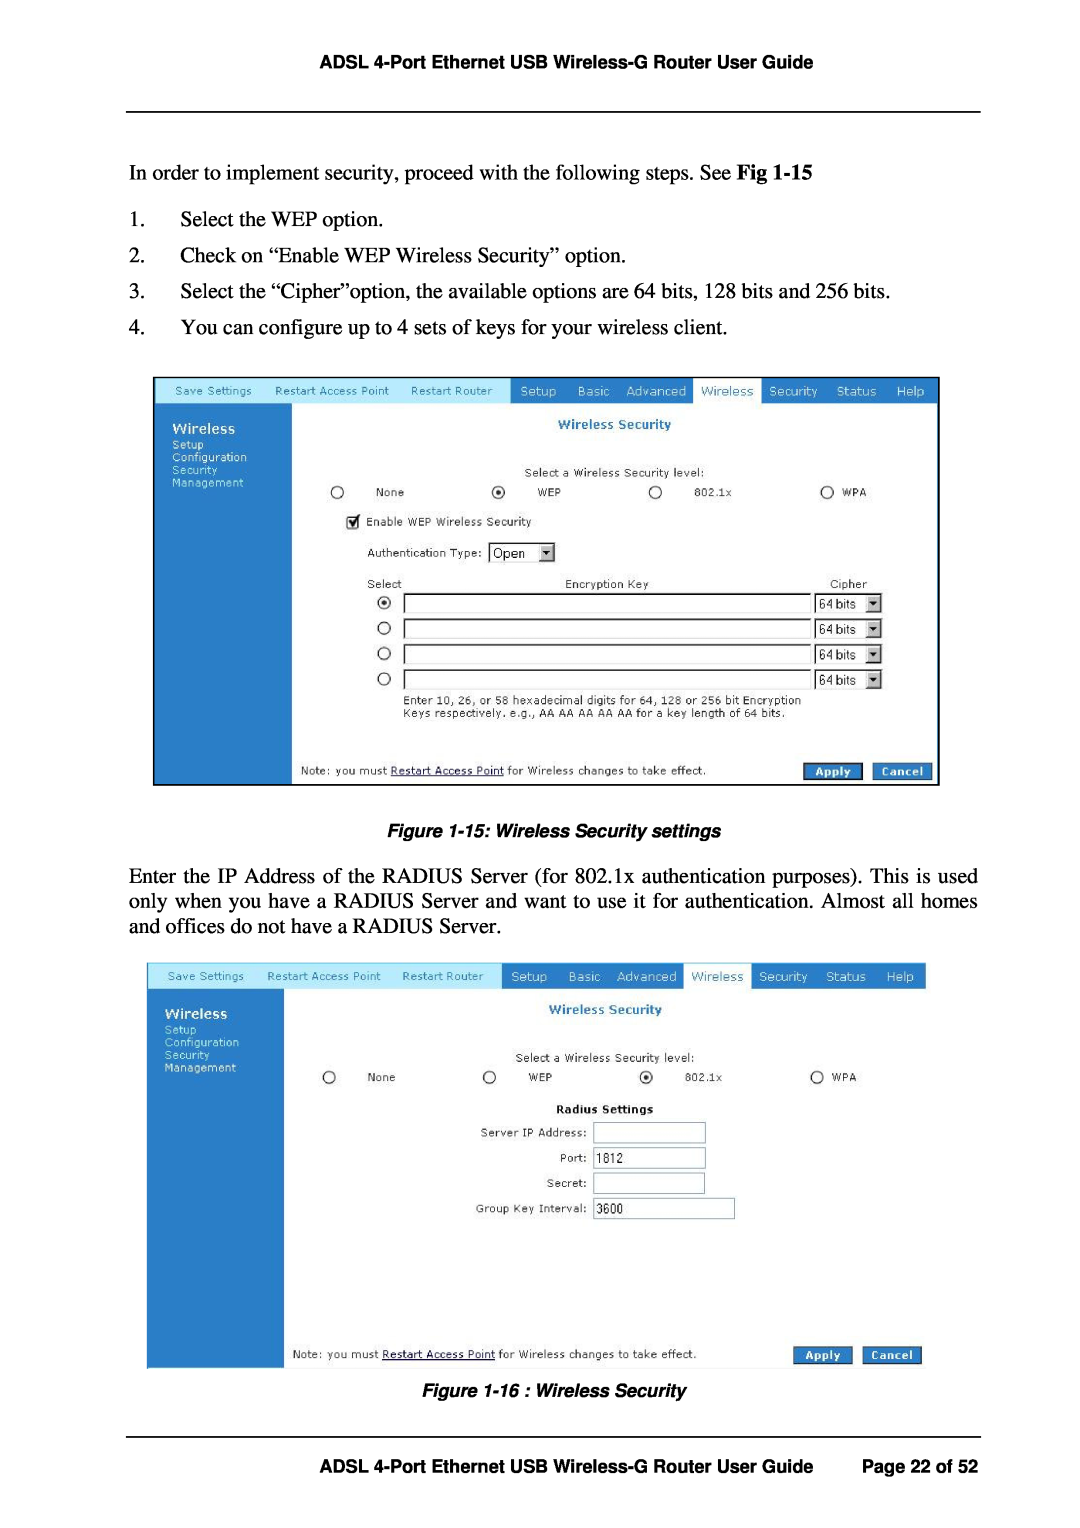 APC ADSL 4-Port manual Select the WEP option 